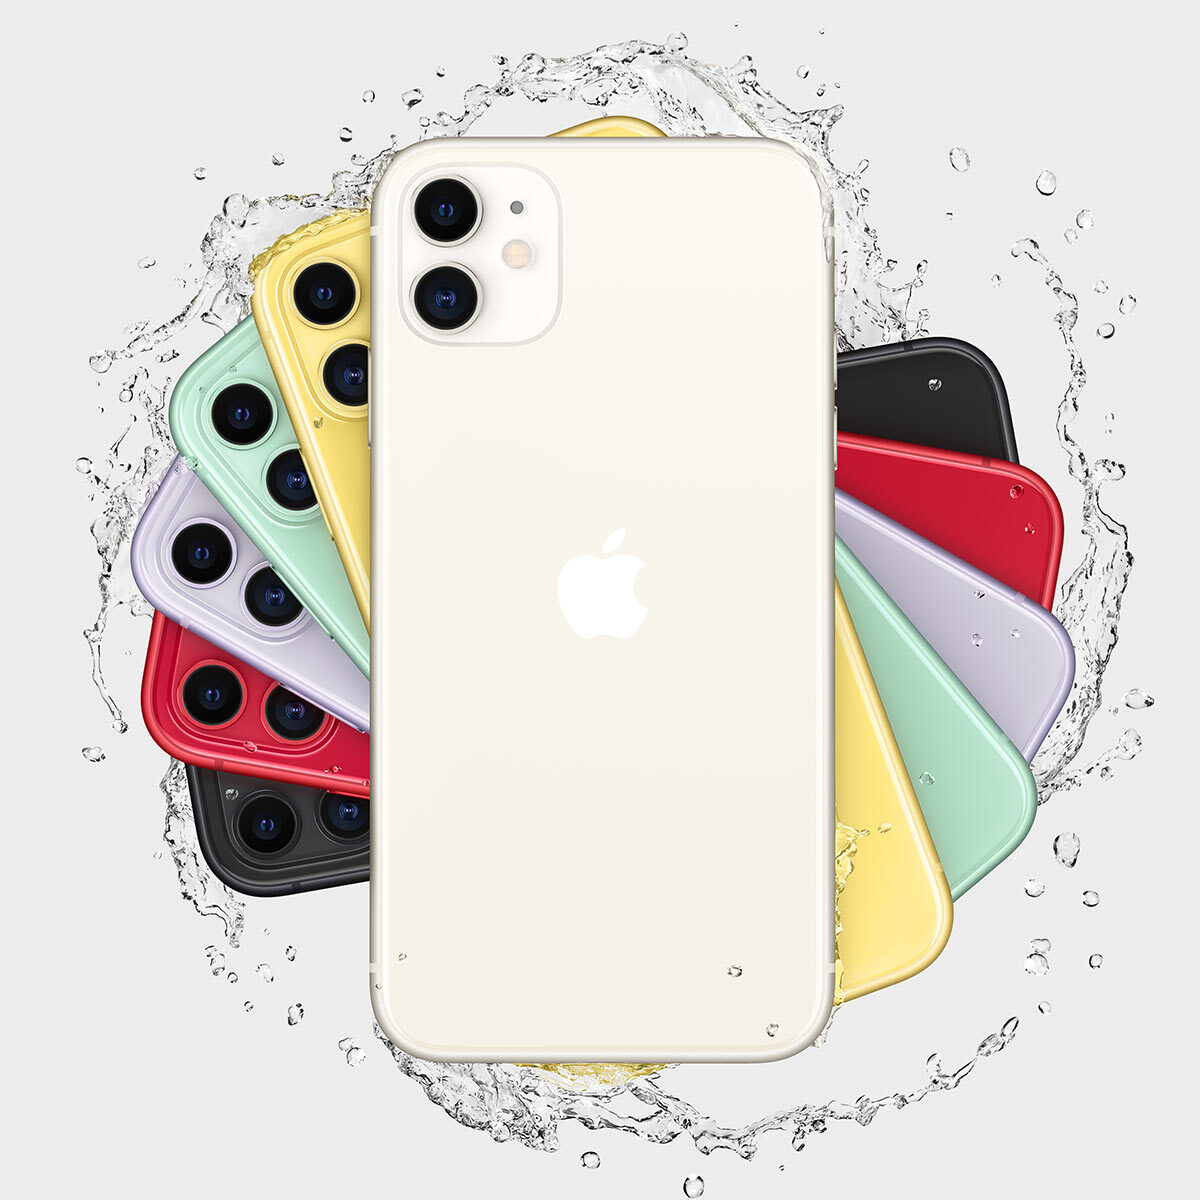 Buy Apple iPhone 11 128GB Sim Free Mobile Phone in White, MHDJ3B/A at costco.co.uk